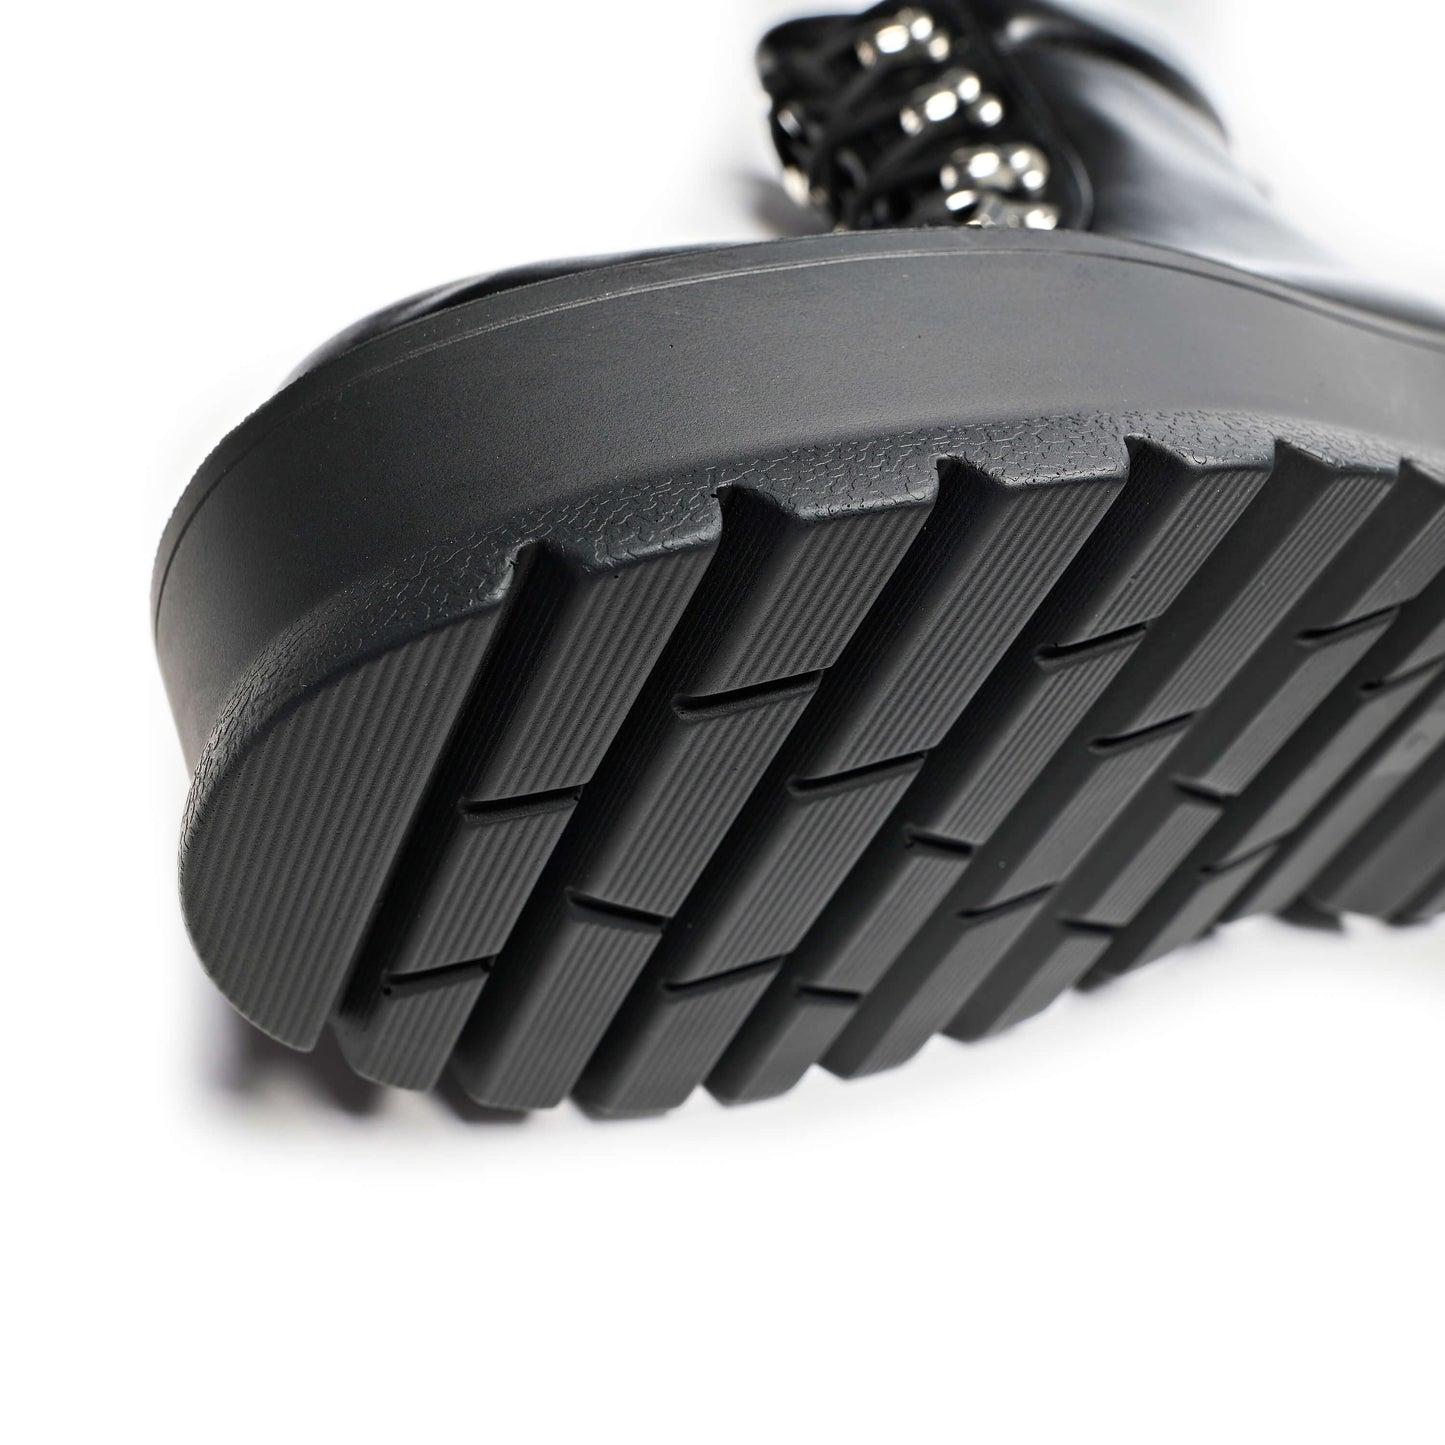 HYDRA All Black Matrix Platform Boots - Ankle Boots - KOI Footwear - Black - Sole View